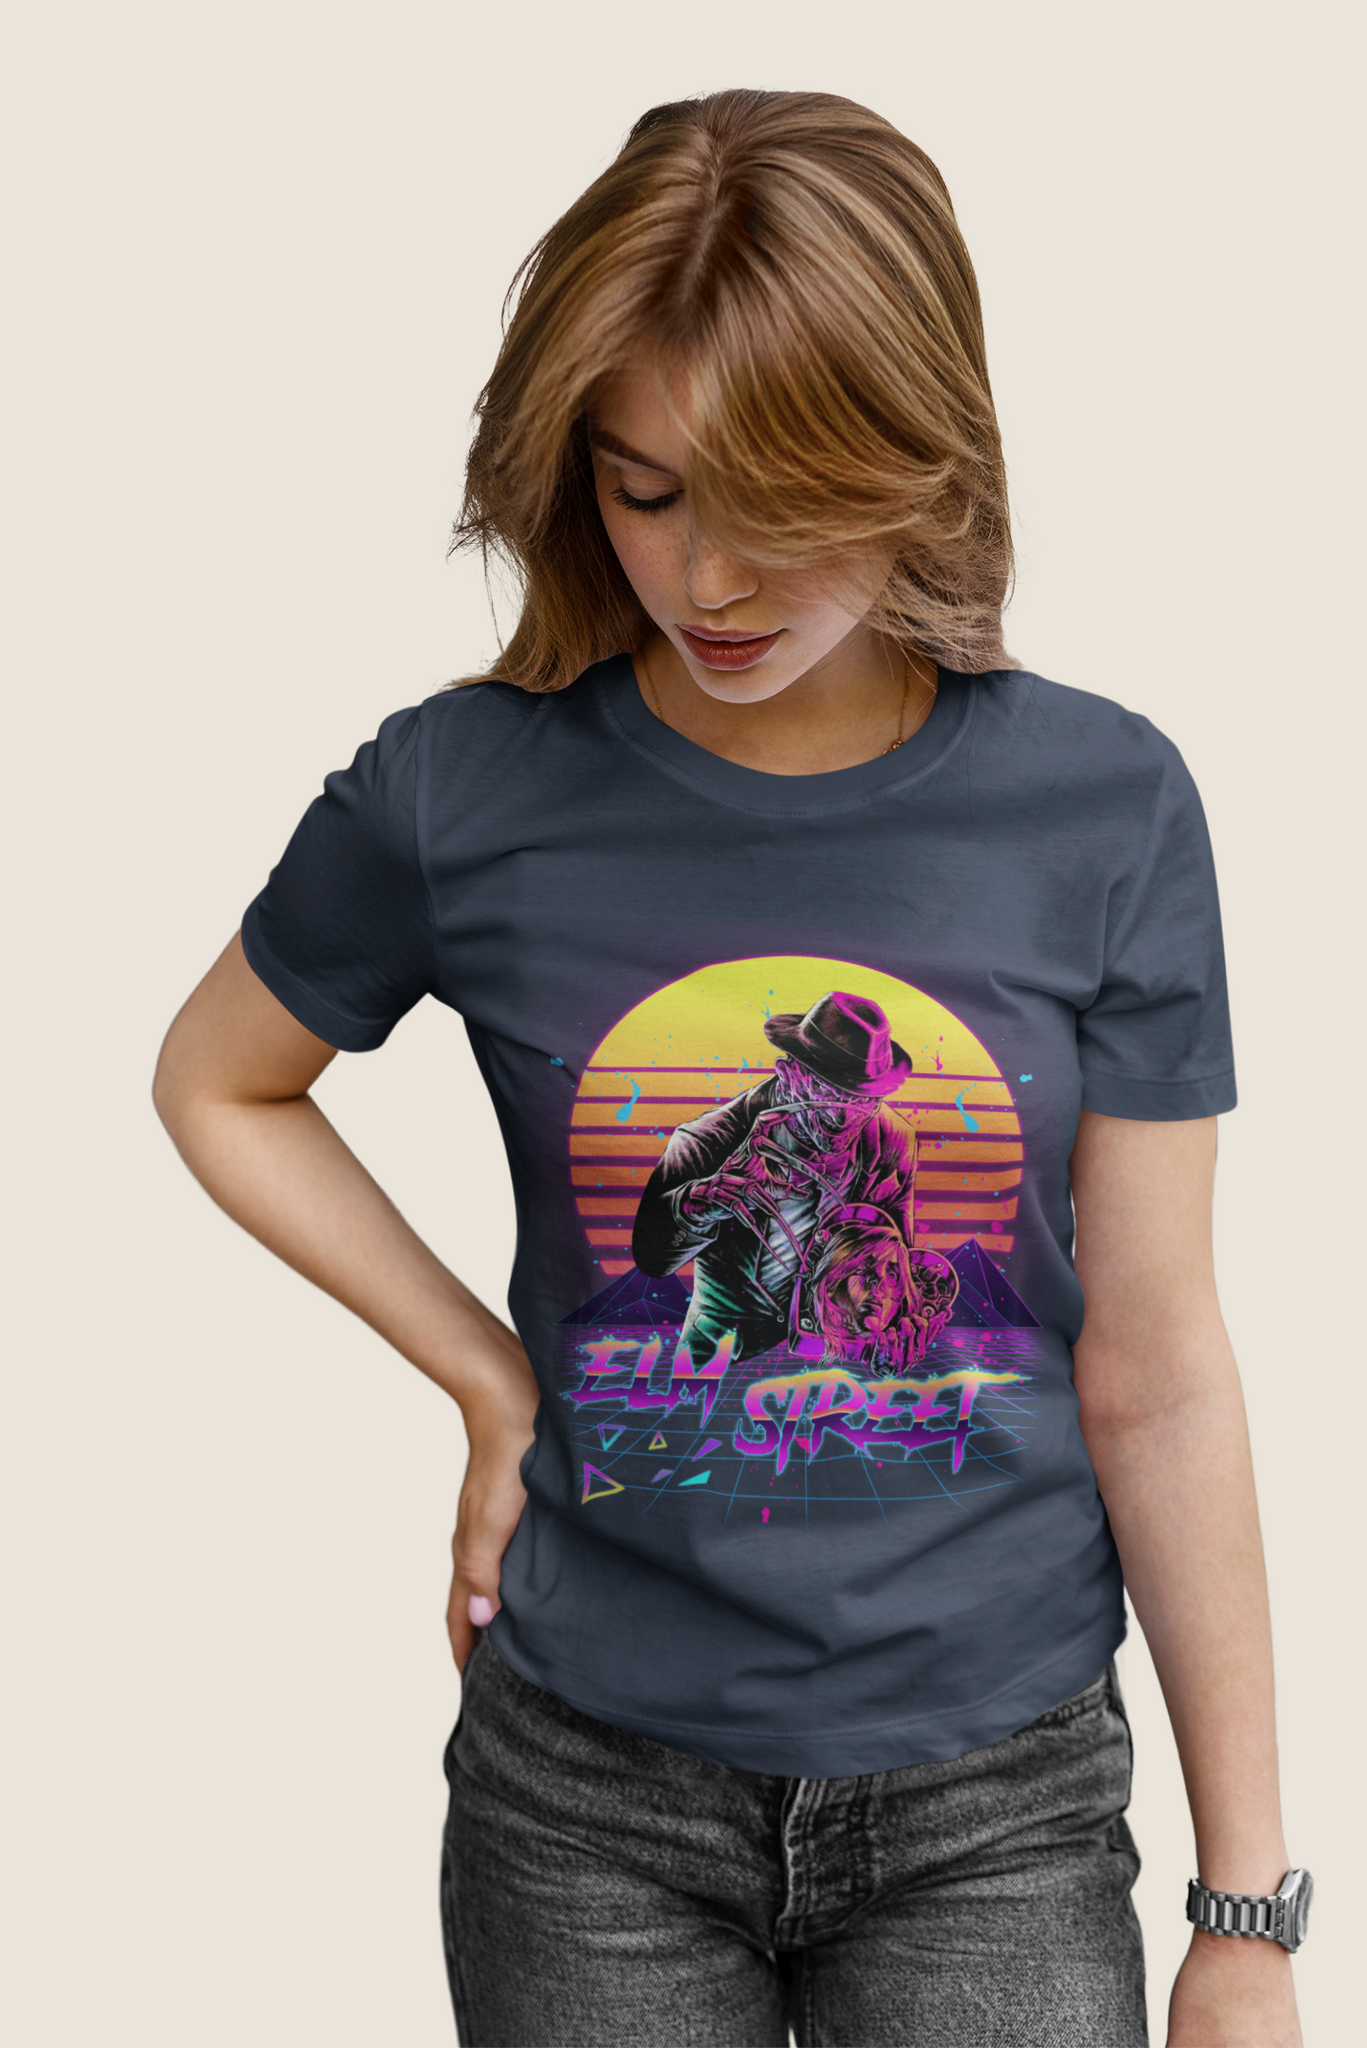 Nightmare On Elm Street Retro T Shirt, Elm Street Tshirt, Freddy Krueger T Shirt, Halloween Gifts